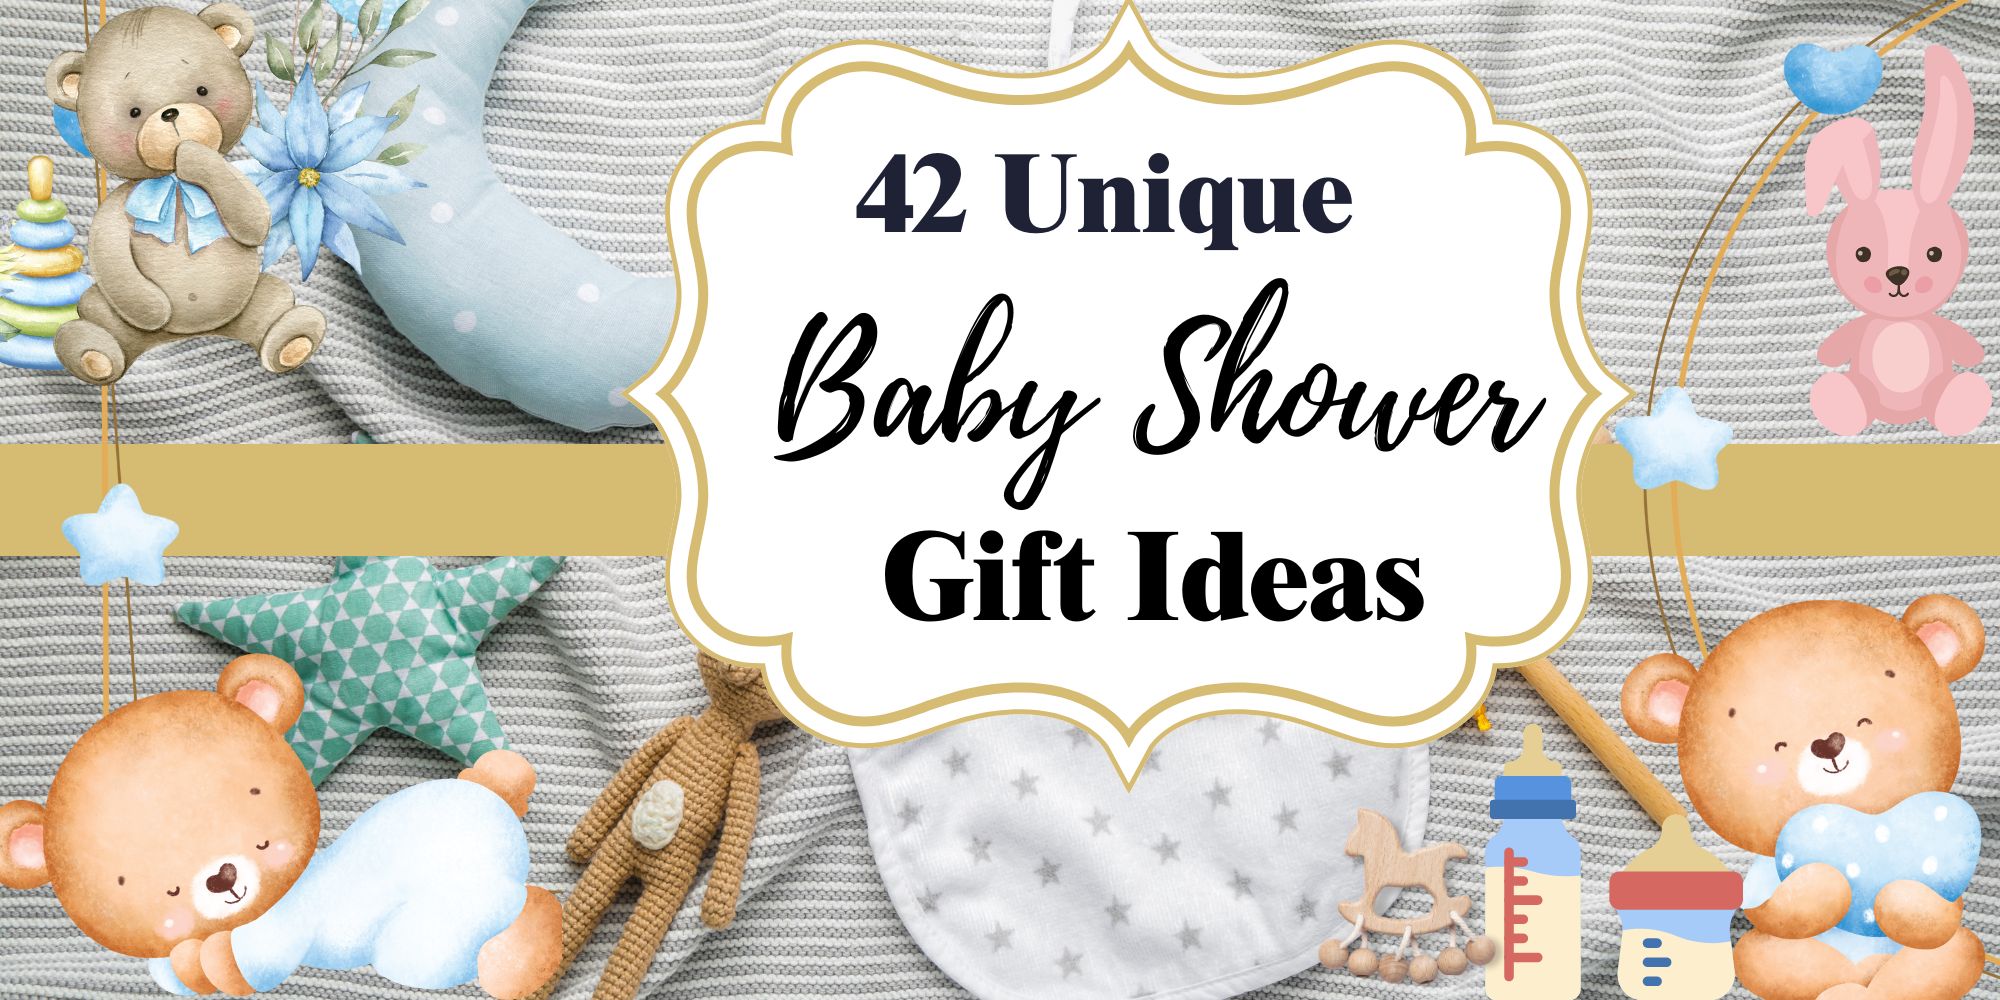 42 Unique Baby Shower Gift Ideas